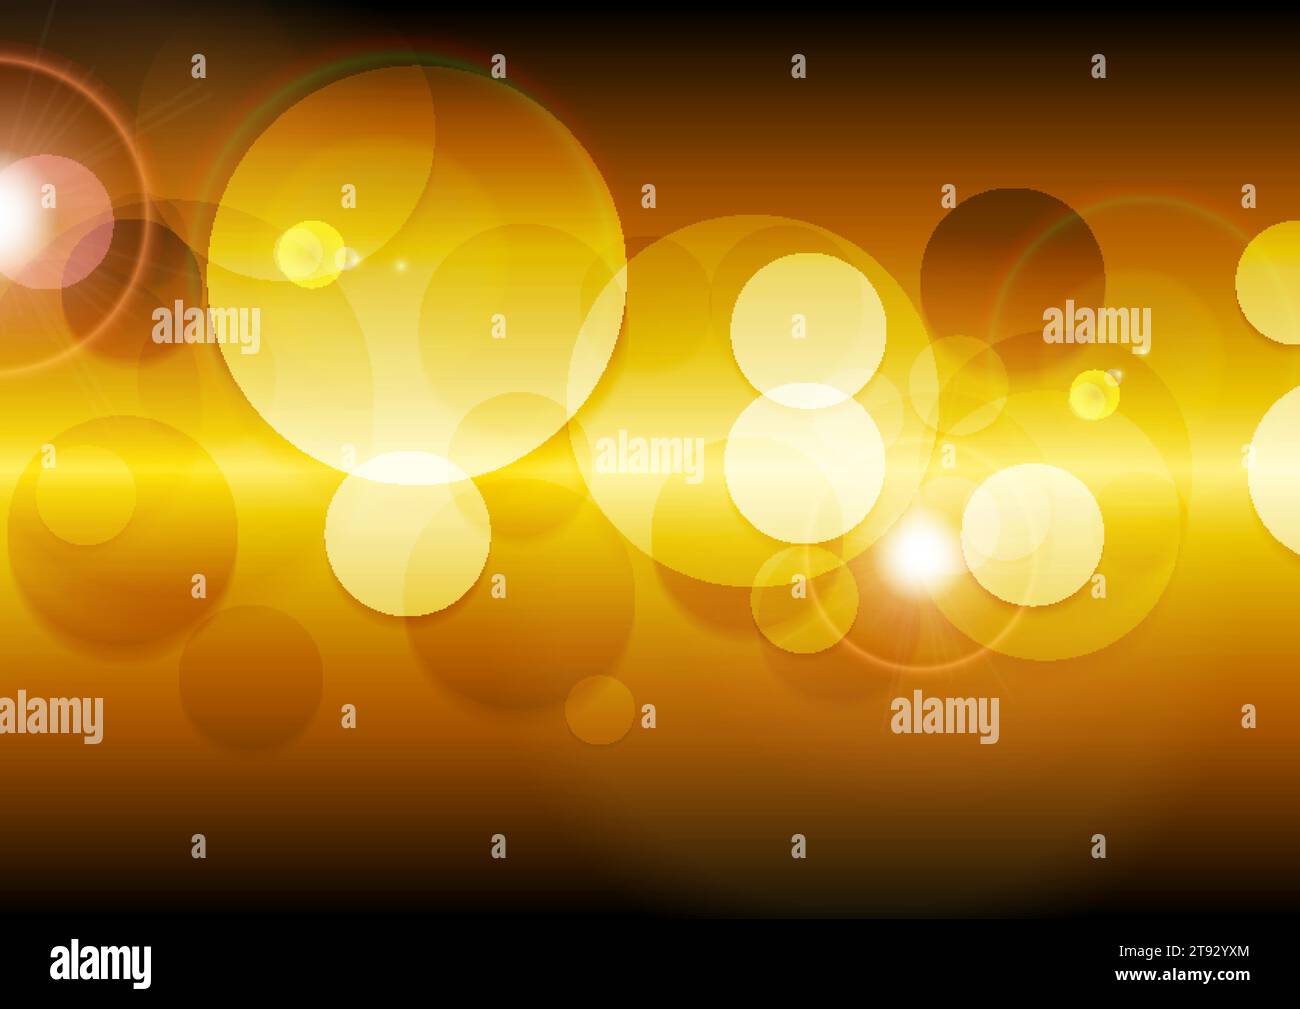 Shiny orange circles tech geometric abstract background. Vector design Stock Vector